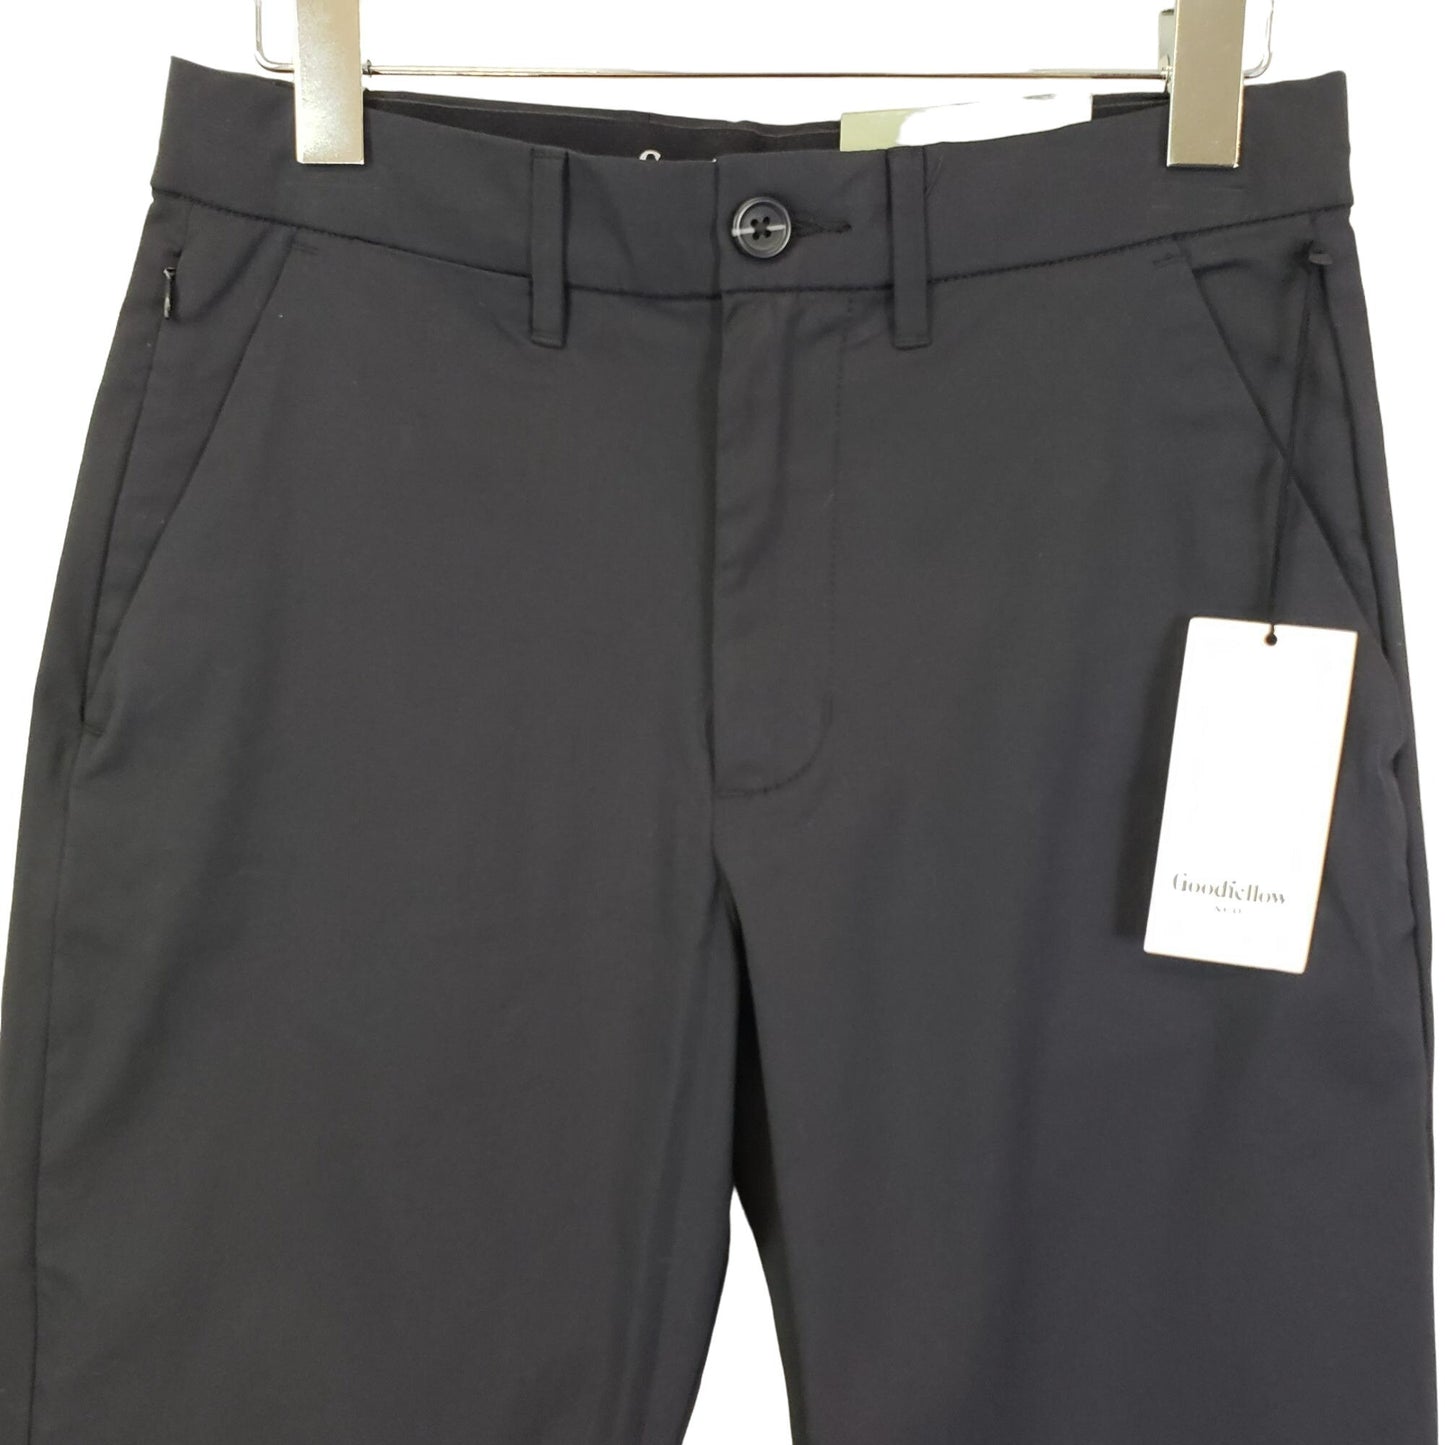 NWT Goodfellow & Co Slim Tech Chino Pants Size 28x30